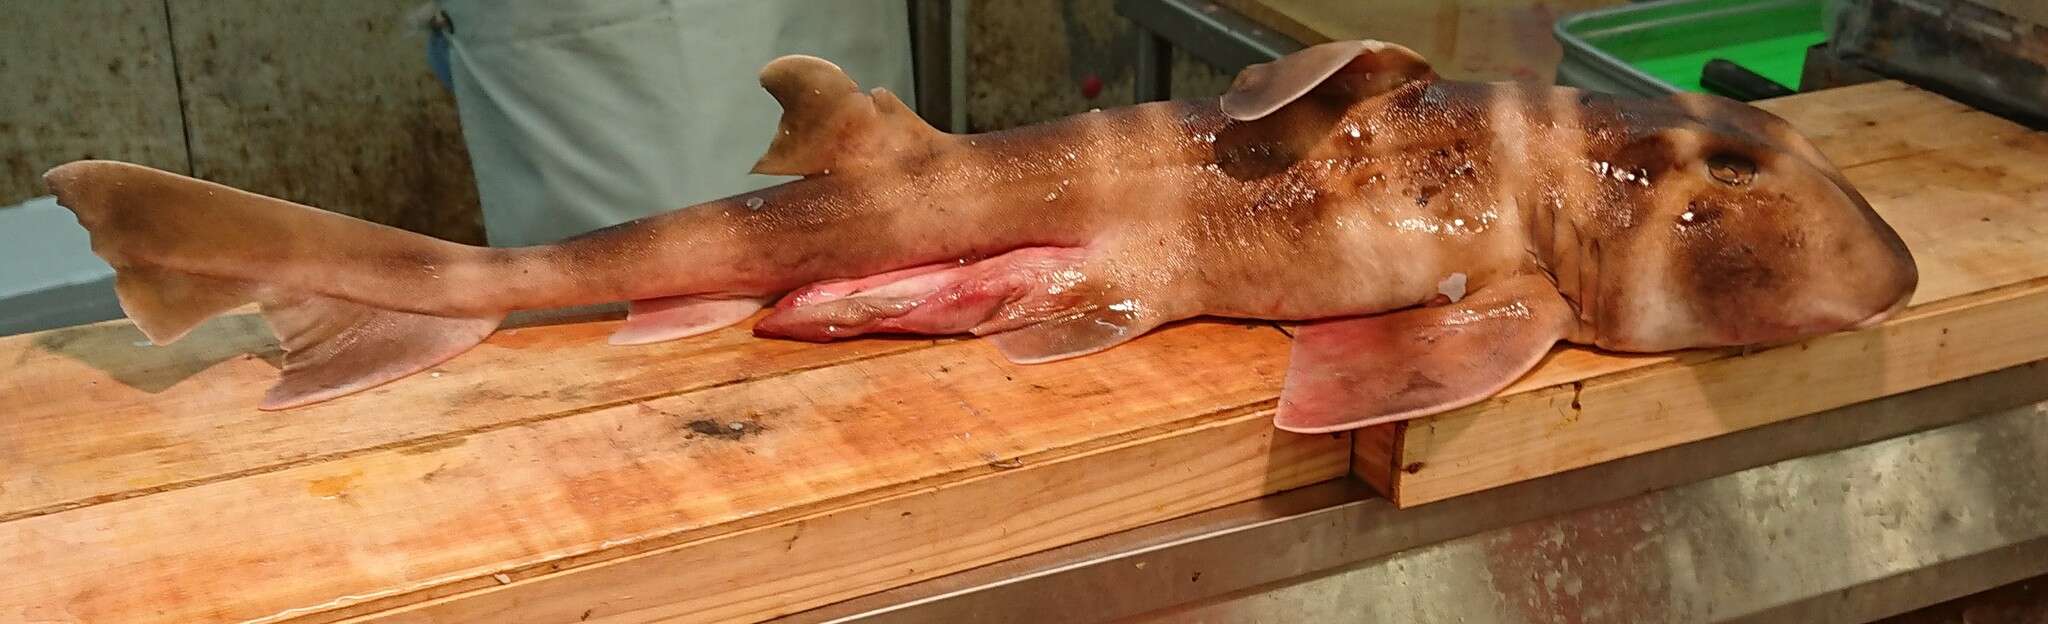 Image of Japanese Bullhead Shark